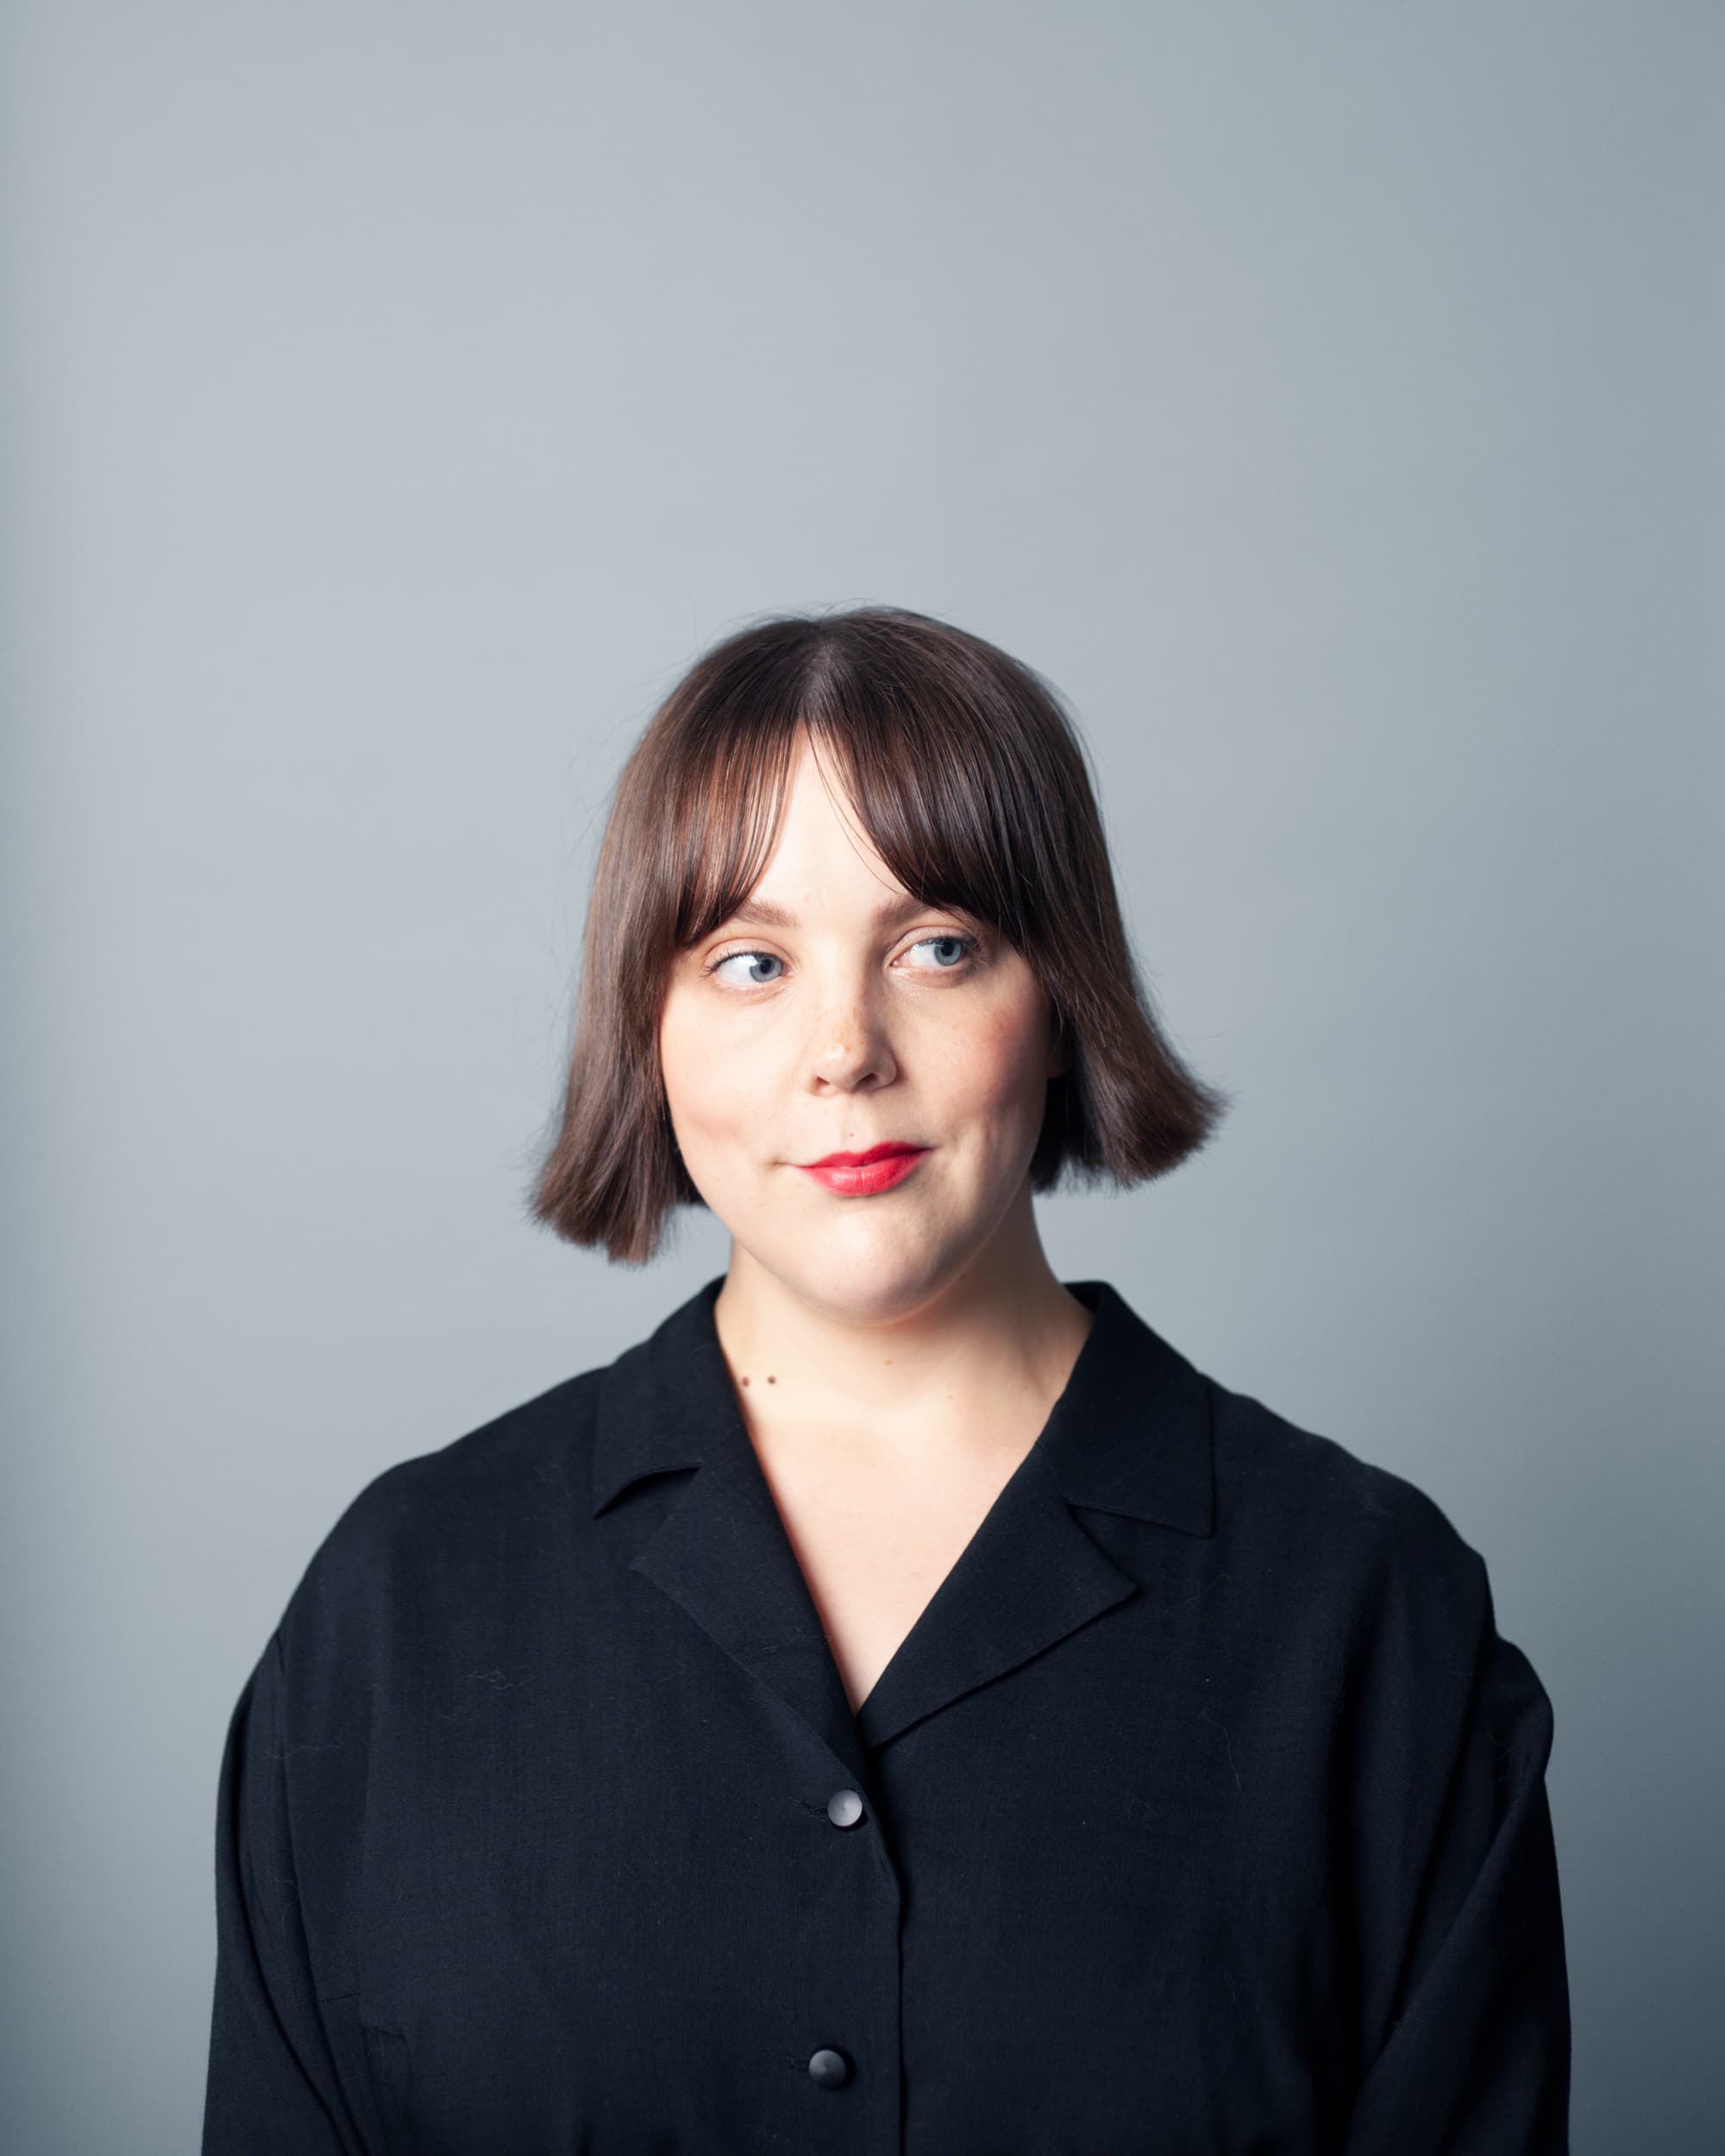 Janika Lähdes, visual communications specialist